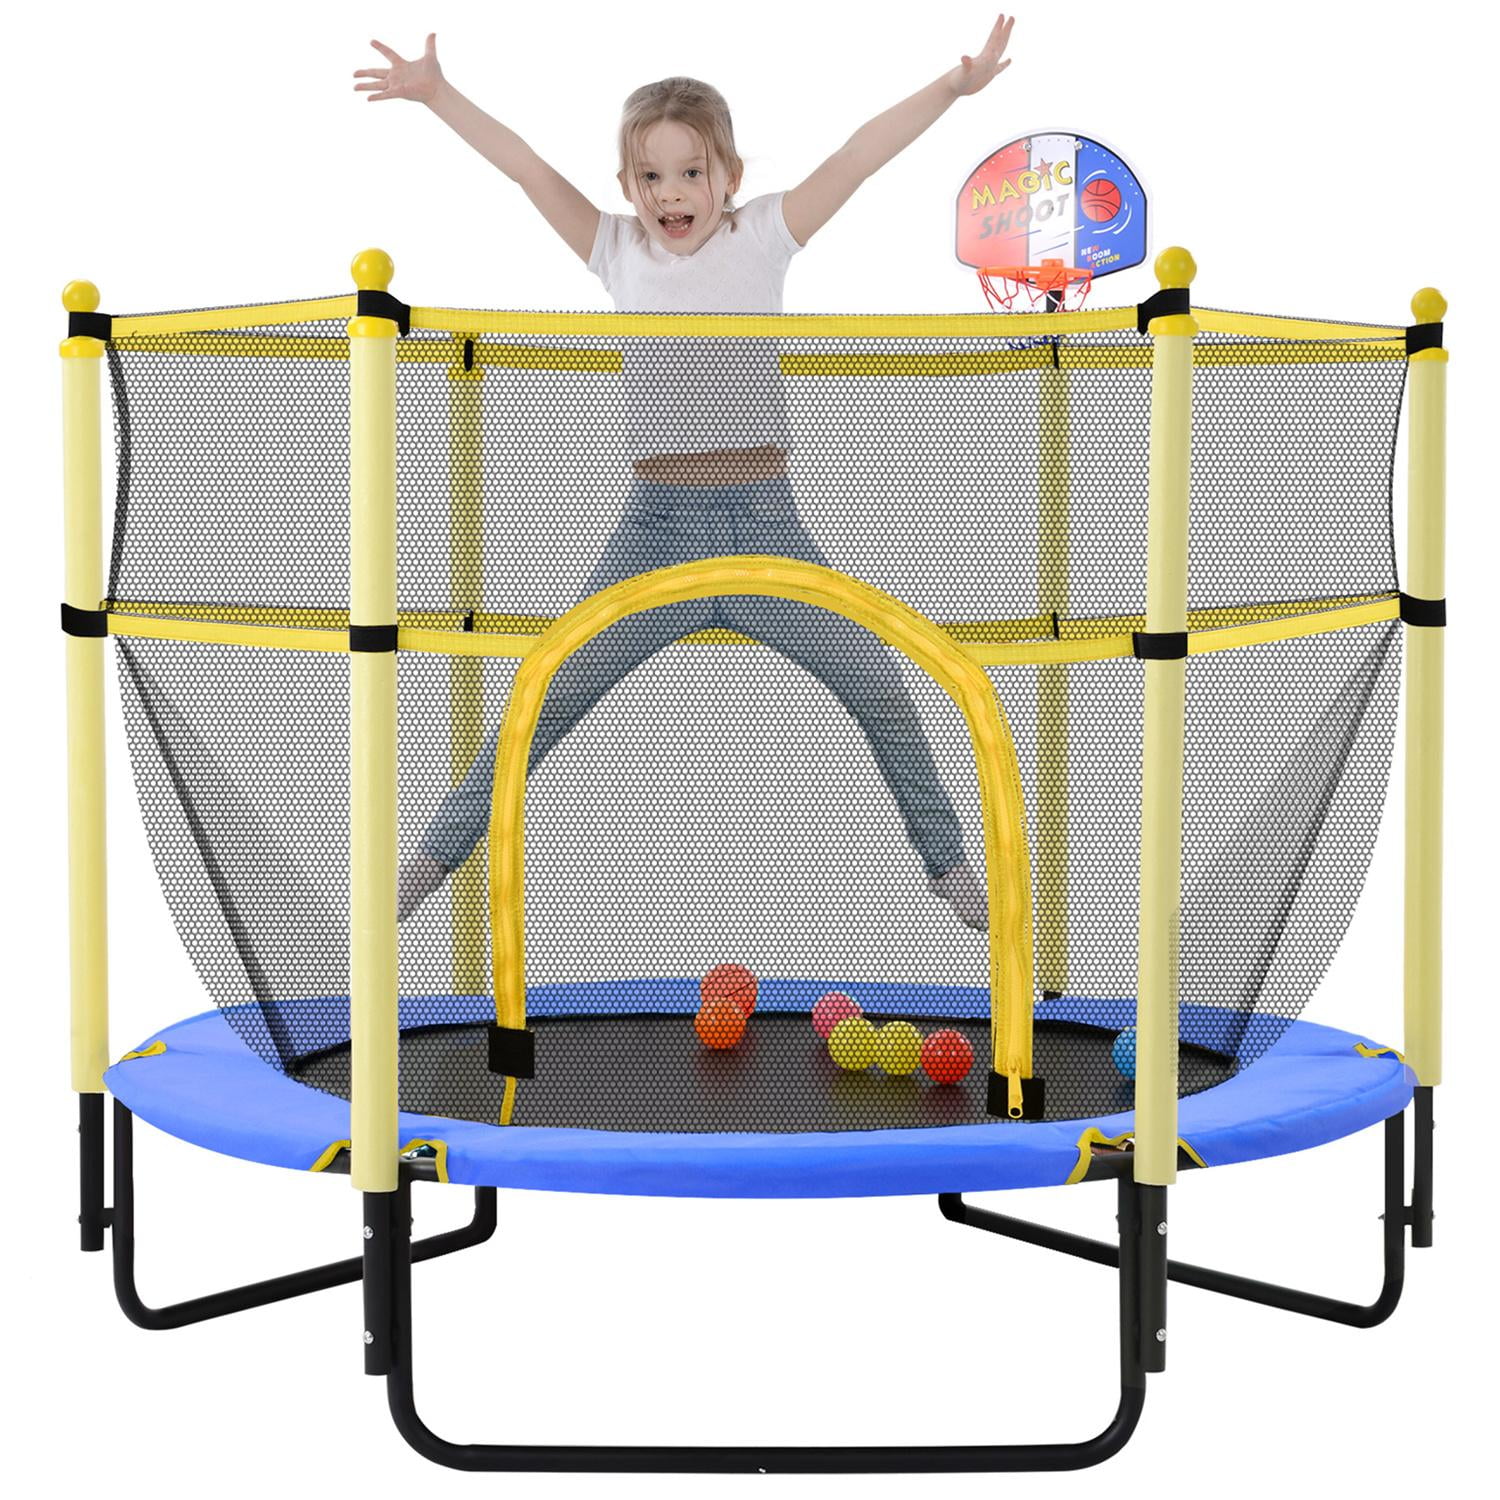 60" Trampoline for Kids/ Outdoor & Indoor Toddler Trampoline with Enclosure 